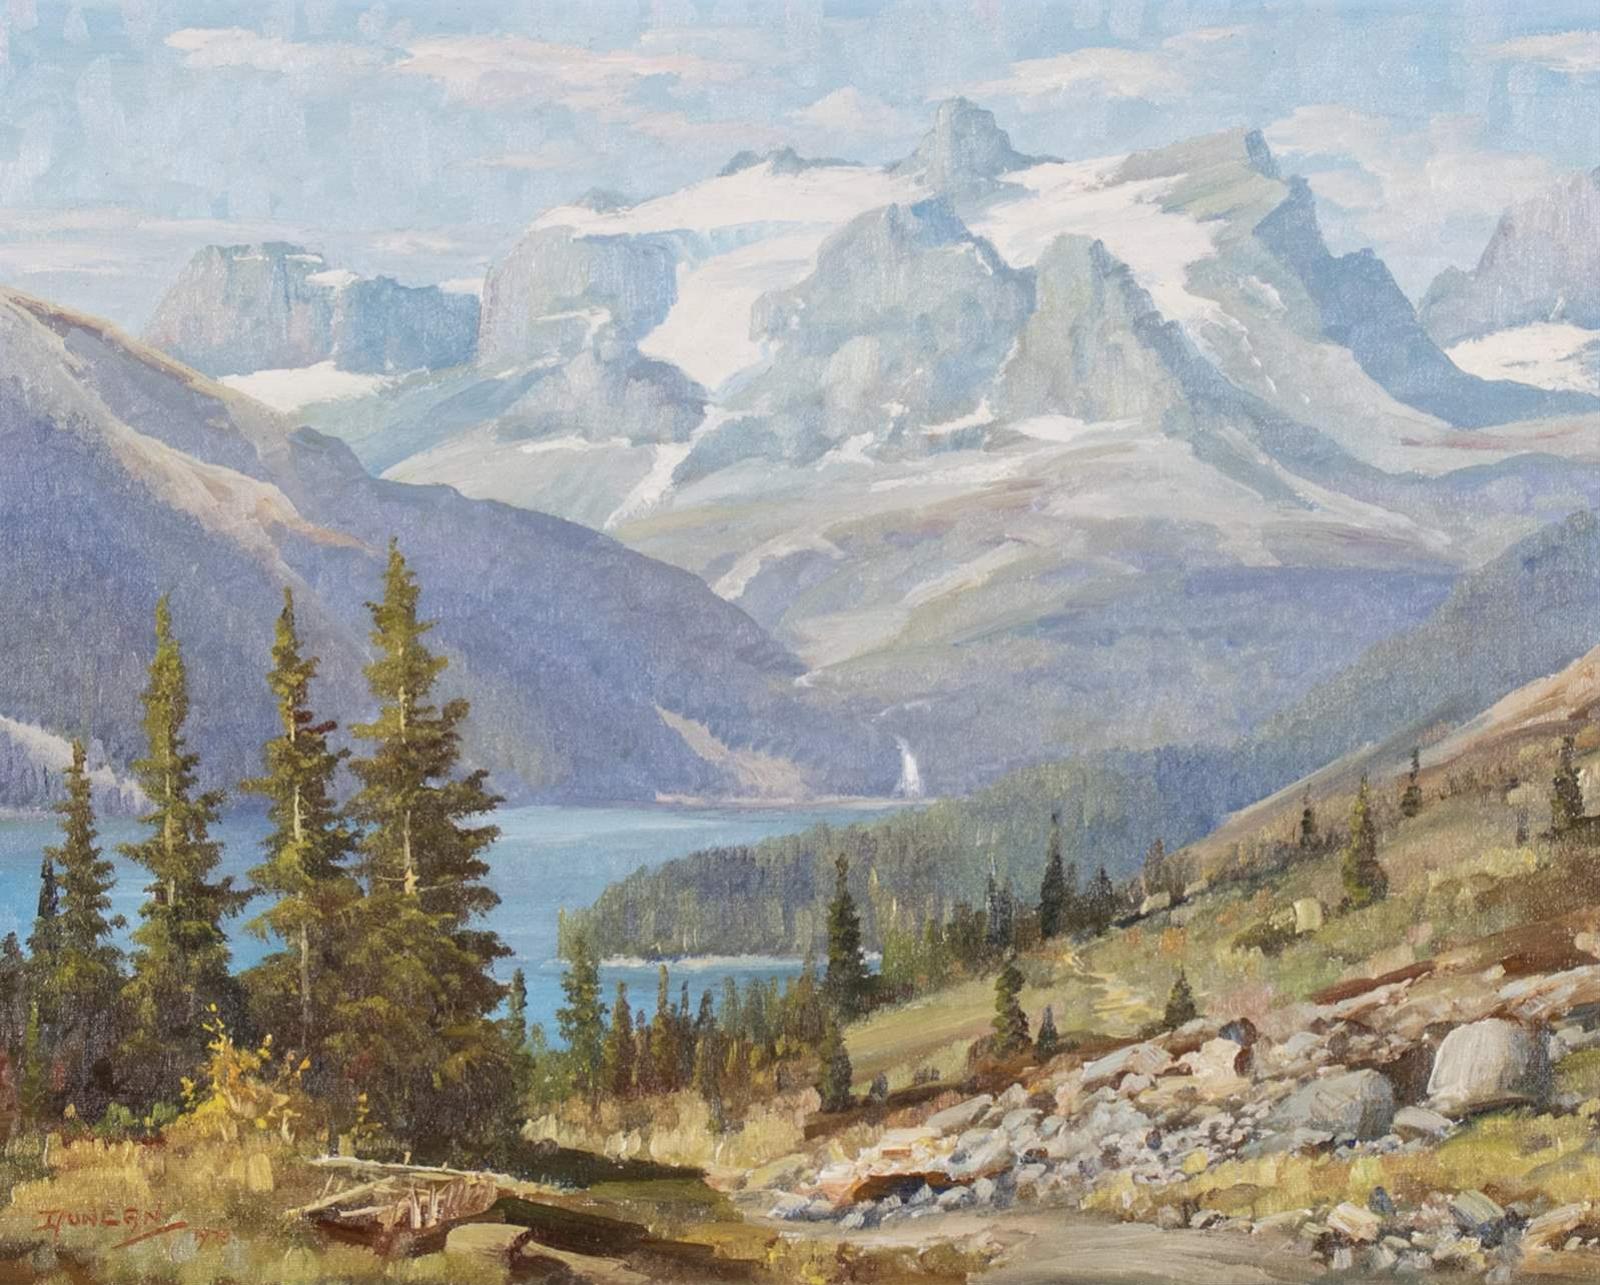 Duncan Mackinnon Crockford (1922-1991) - Trail Overlooking Glacier-Capped Peaks; 1978